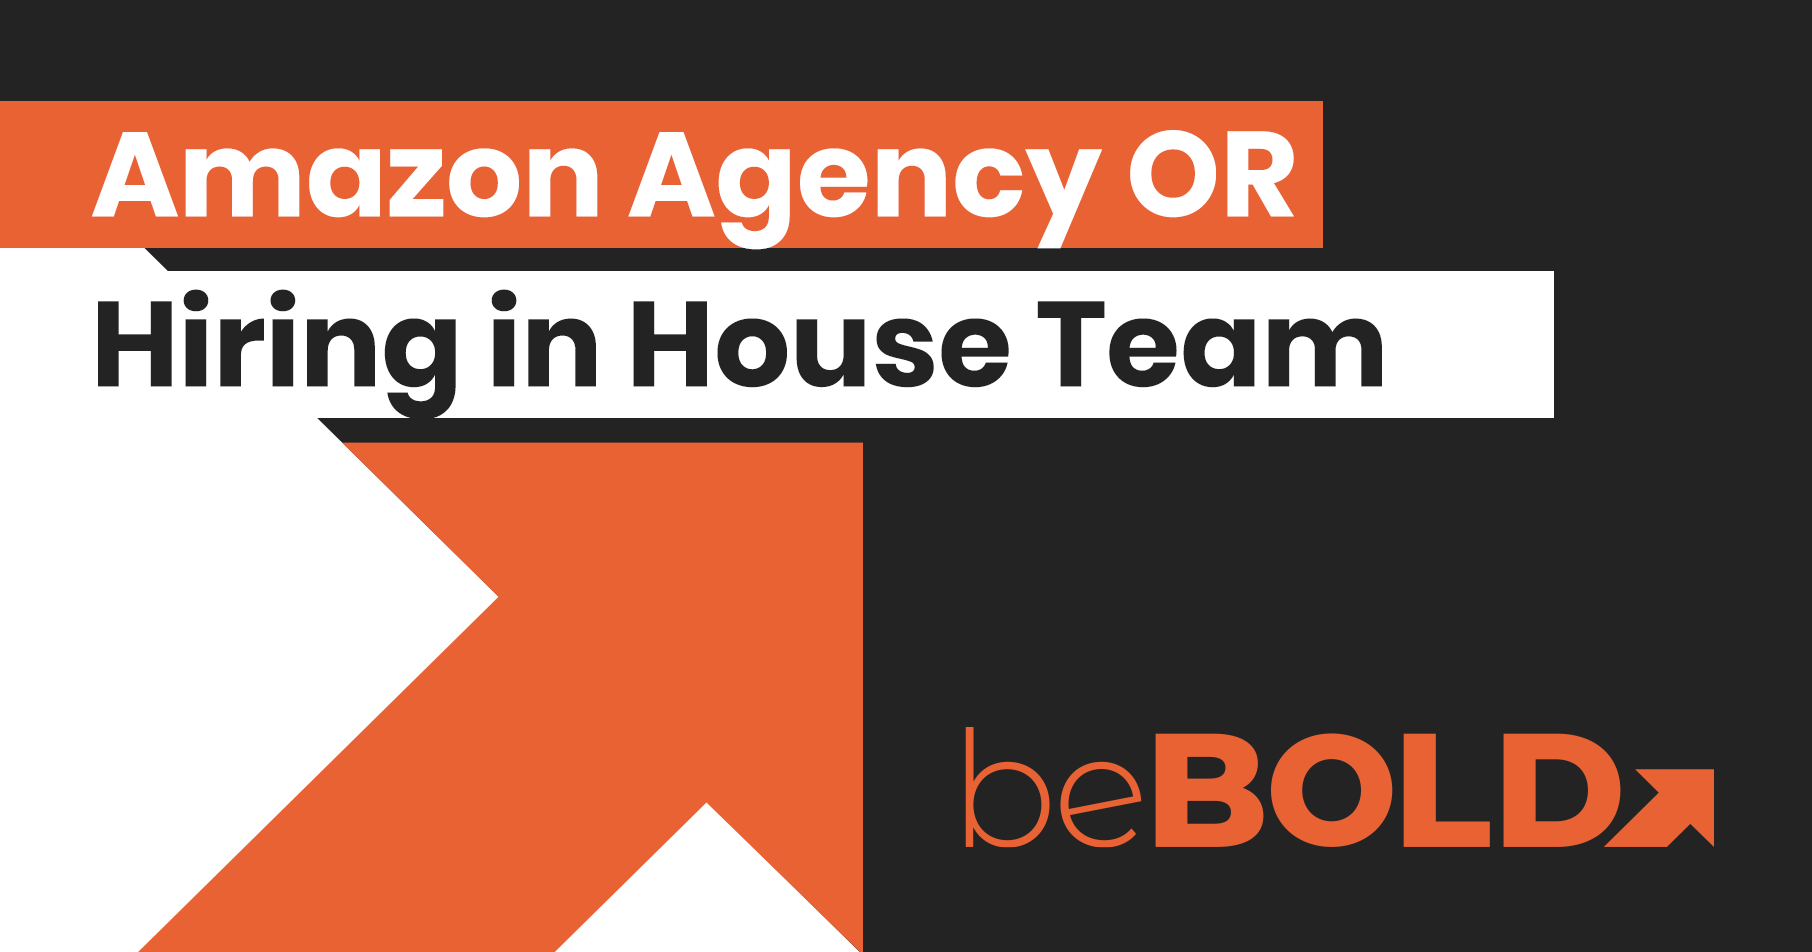 Should I hire an Amazon Agency?